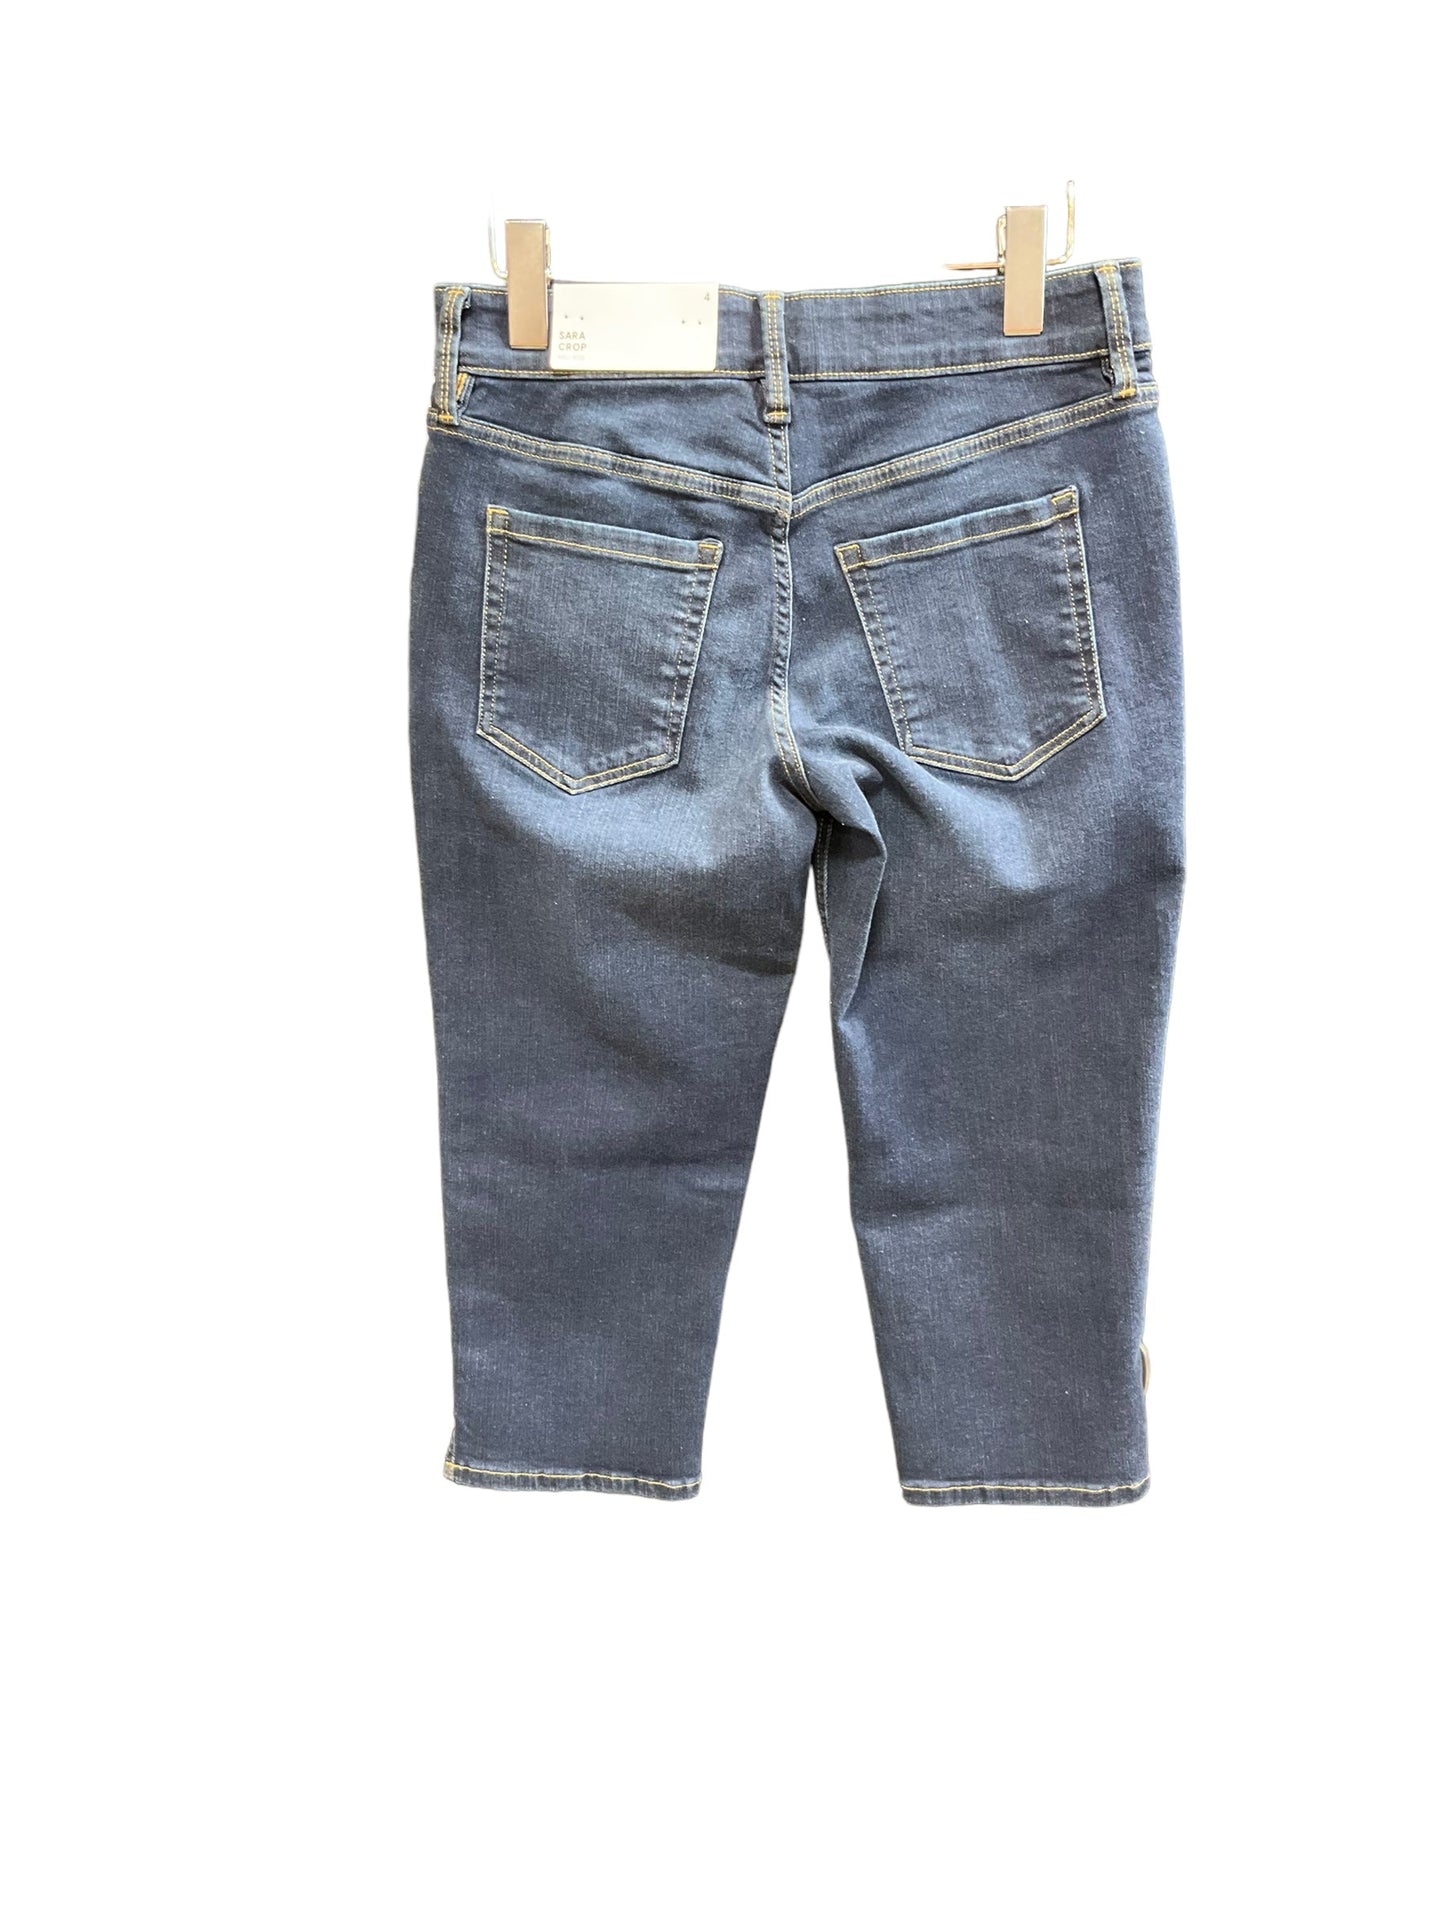 Jeans Cropped By Liz Claiborne  Size: 4